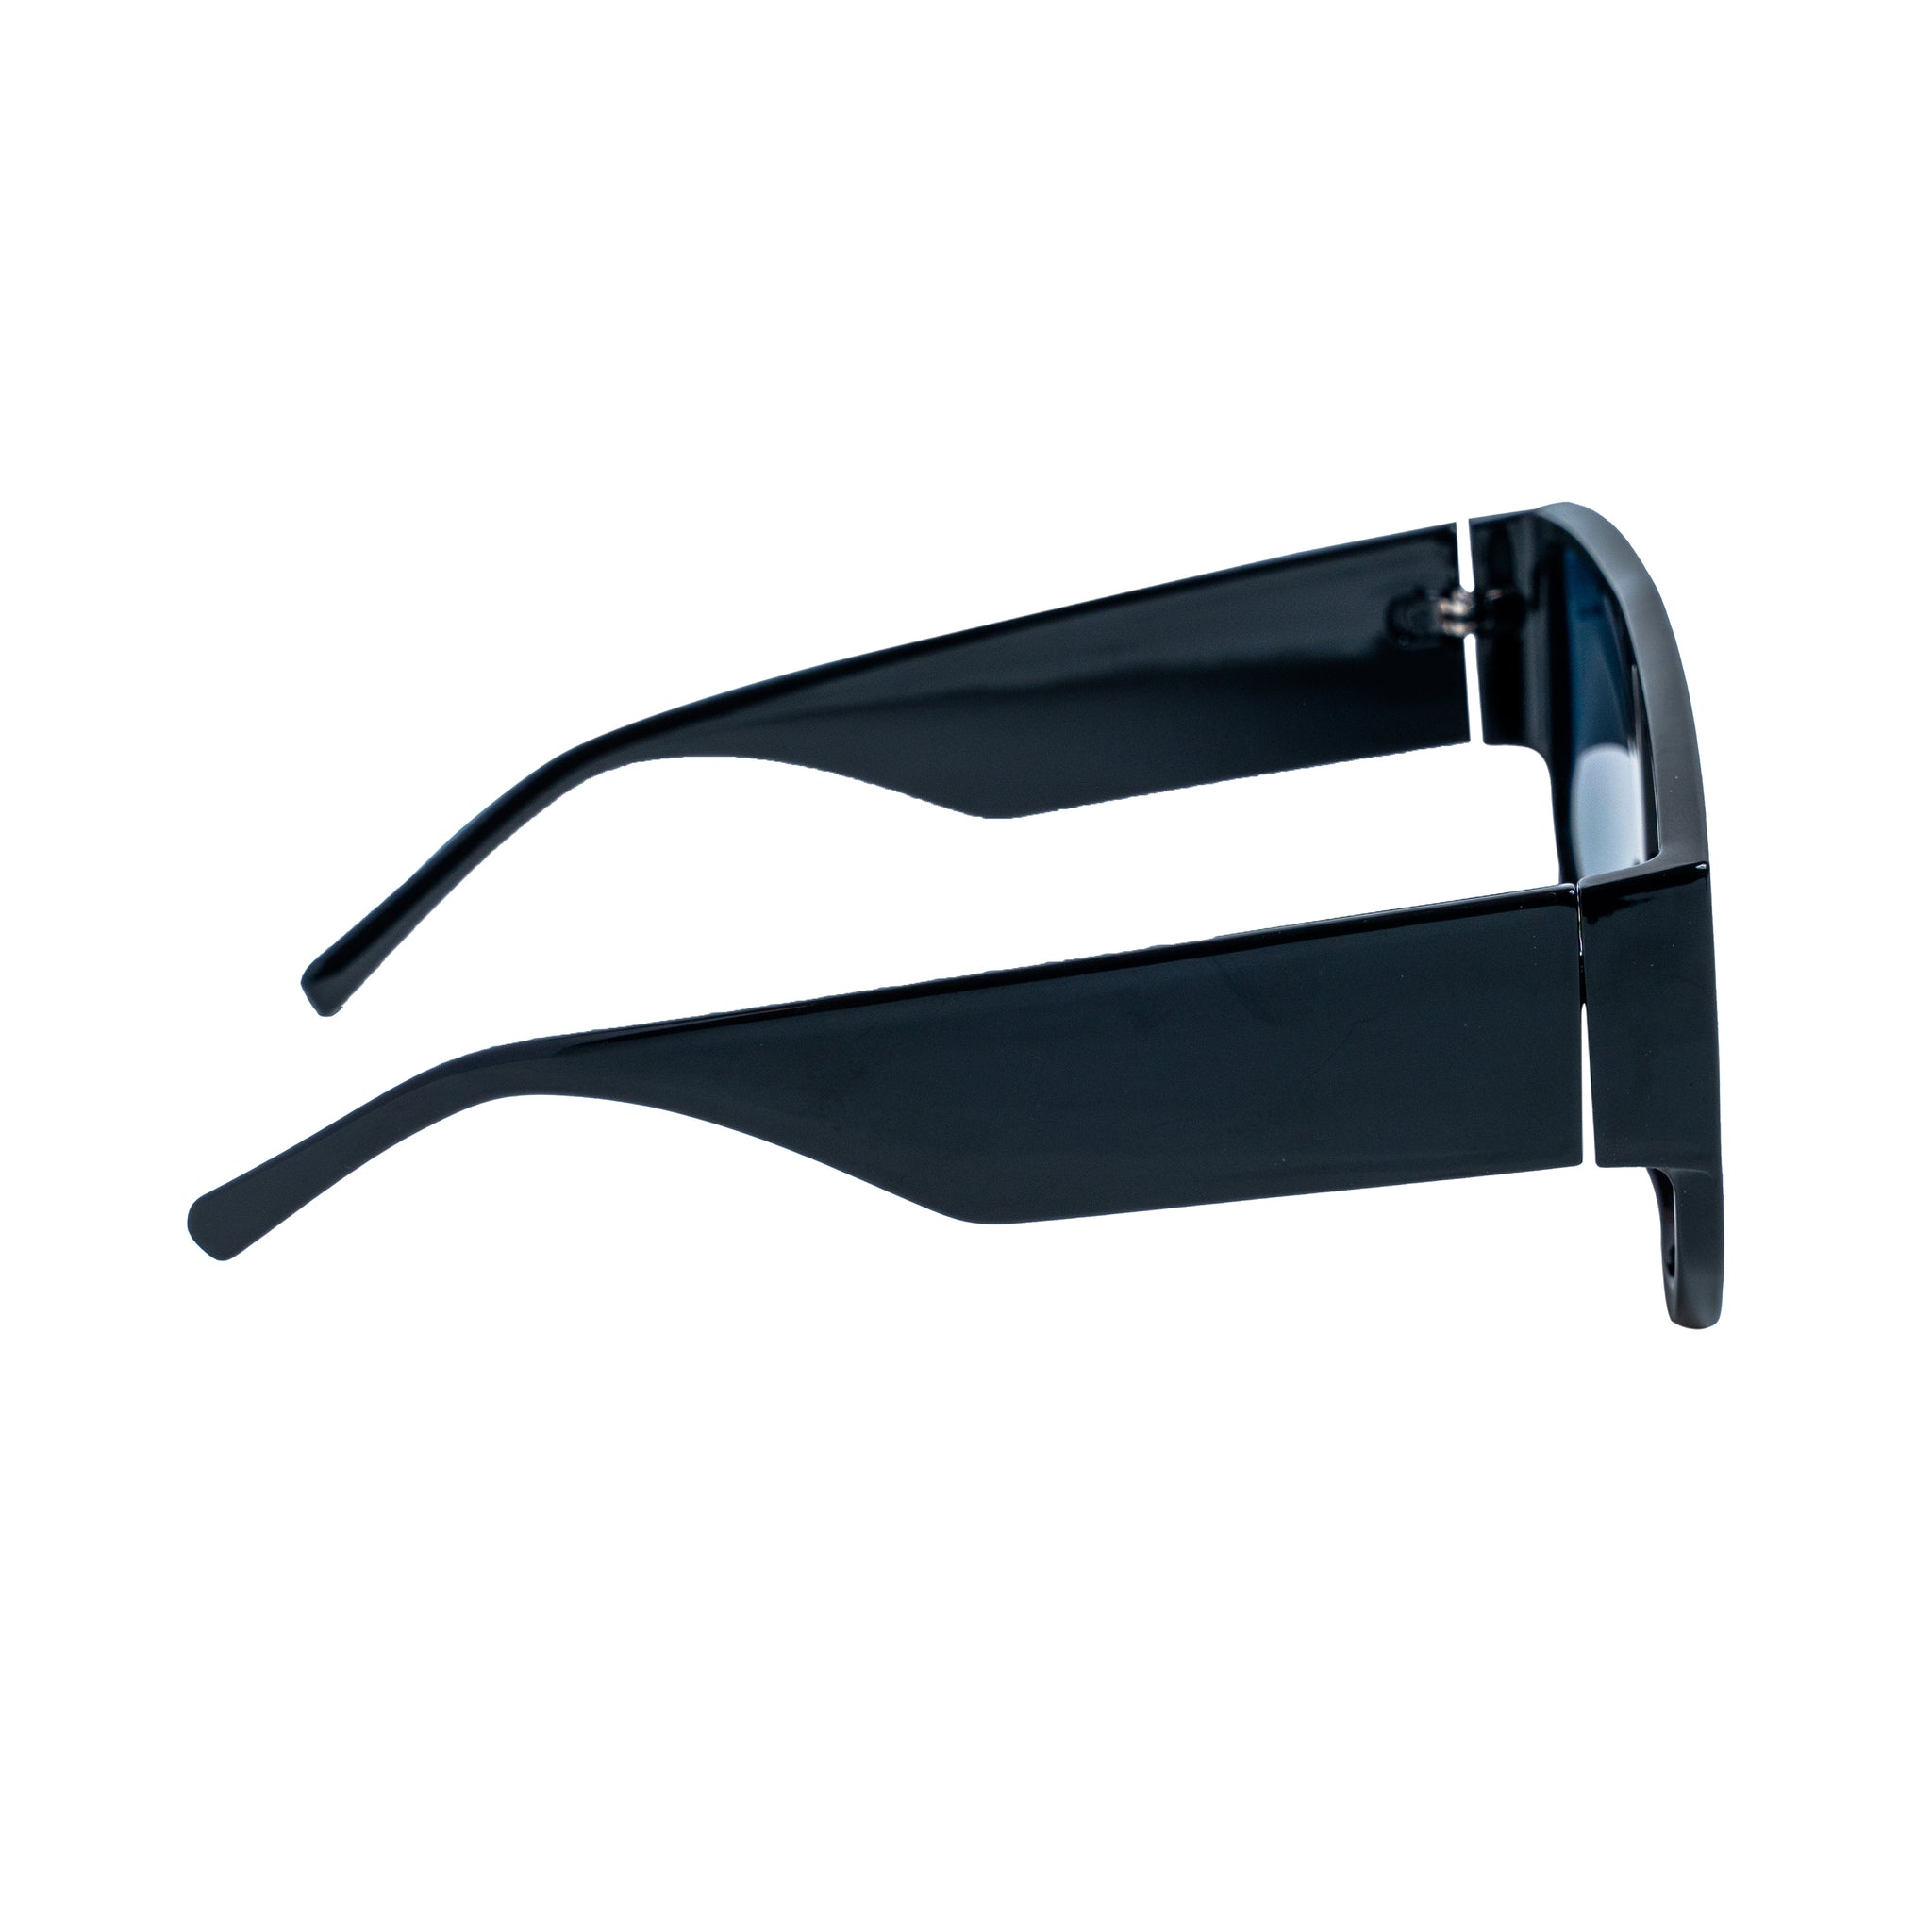 Chokore Retro Oversized UV-400 Protected Sunglasses (Black)